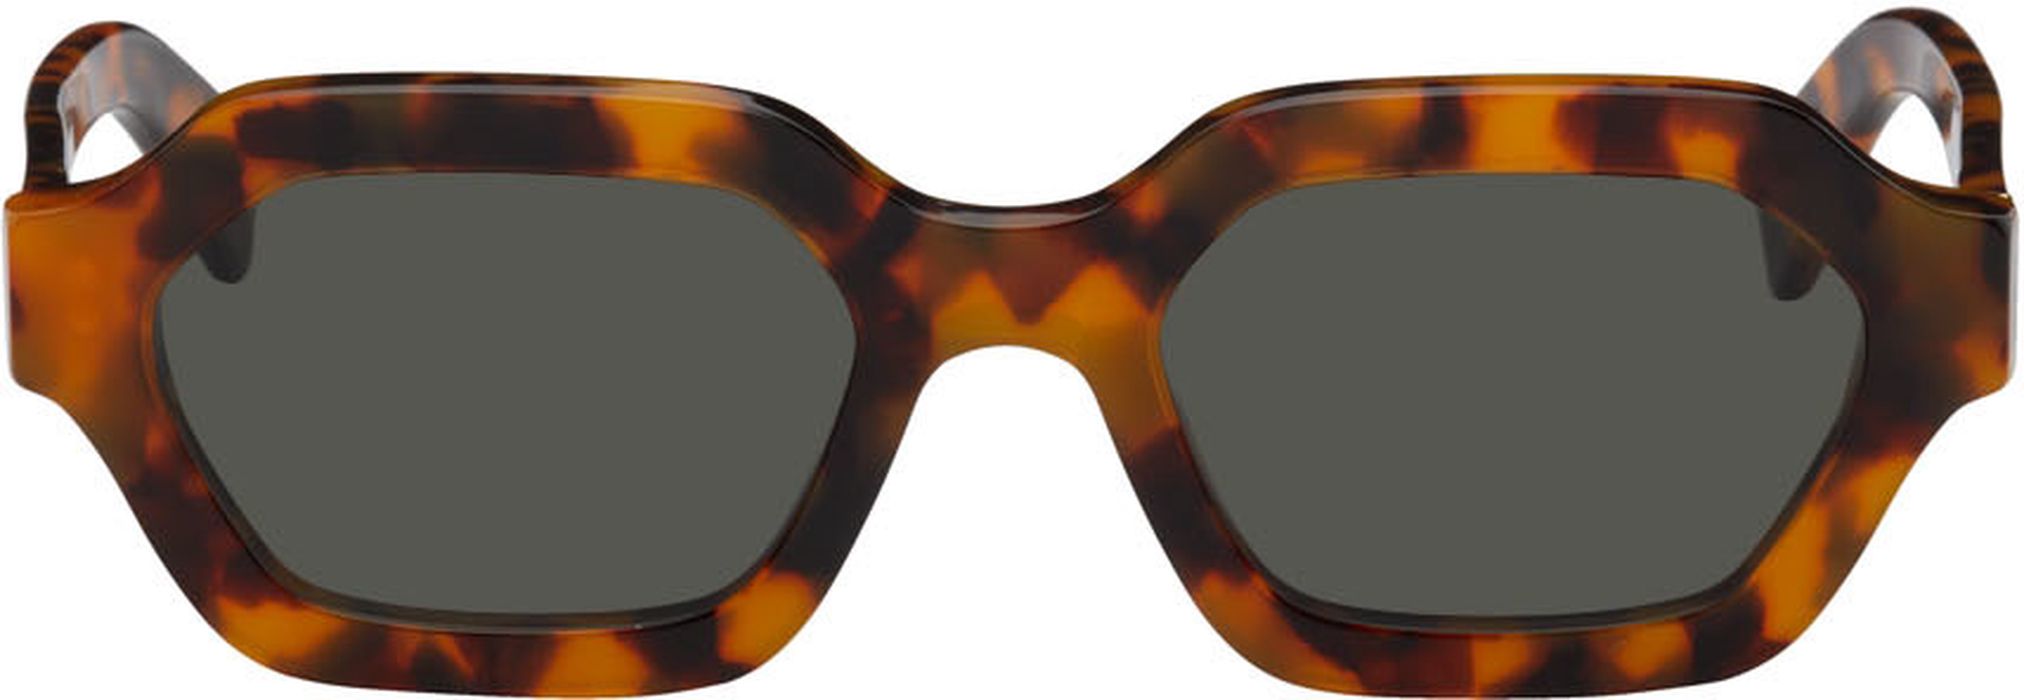 RETROSUPERFUTURE Tortoiseshell Pooch Sunglasses